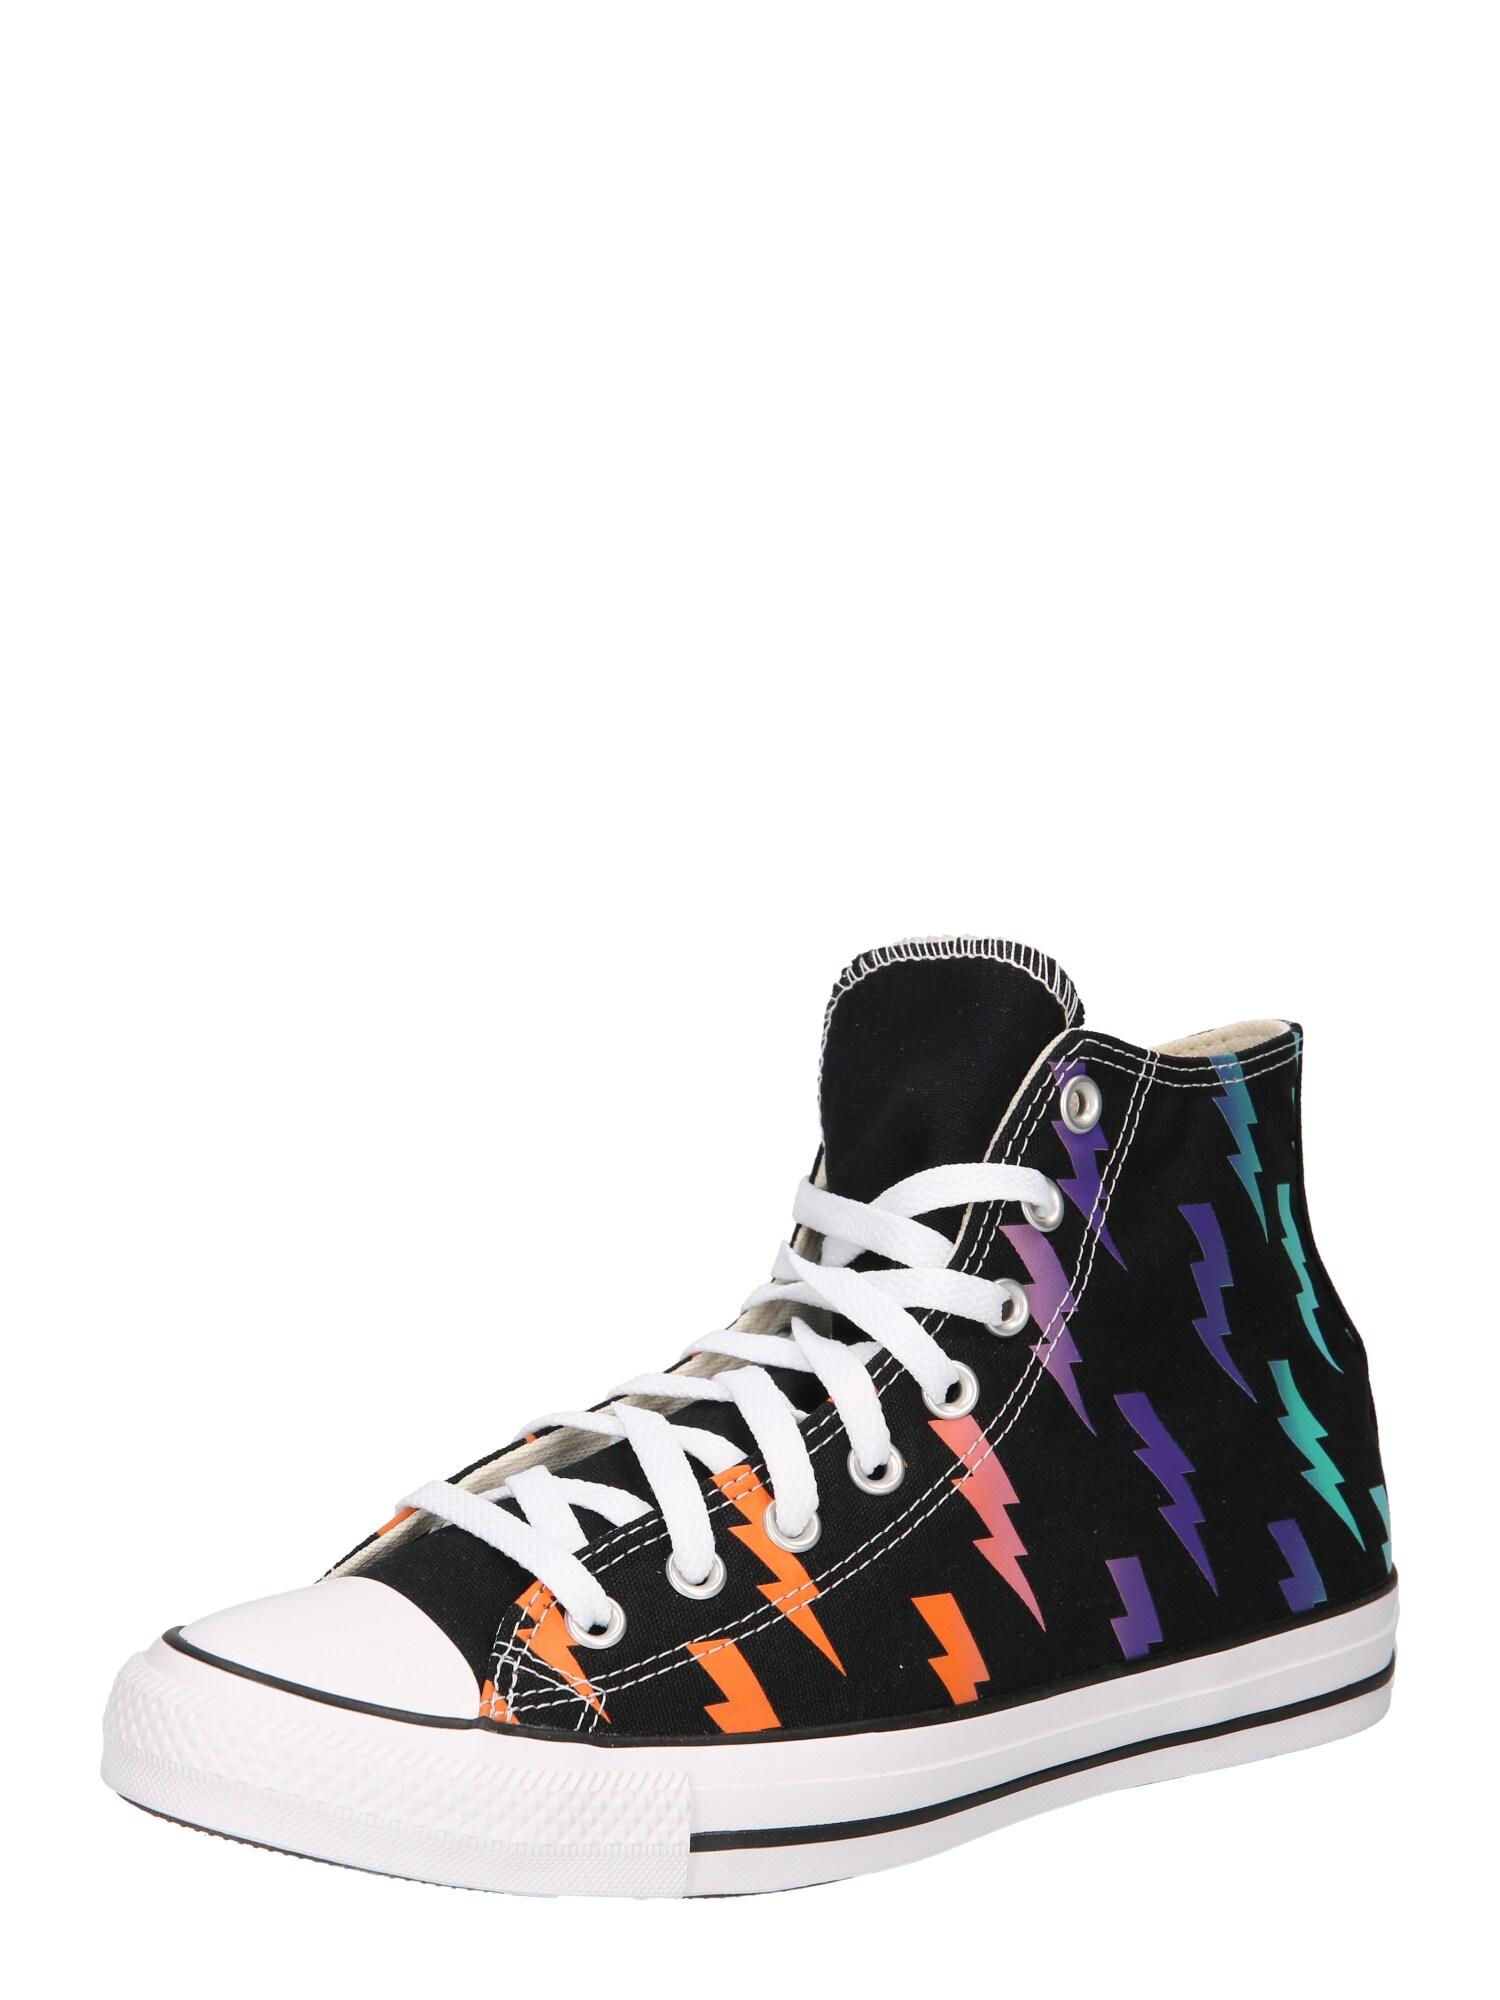 Converse CONVERSE Sneaker 'Chuck Taylor All Star' mint / lila / orange / schwarz